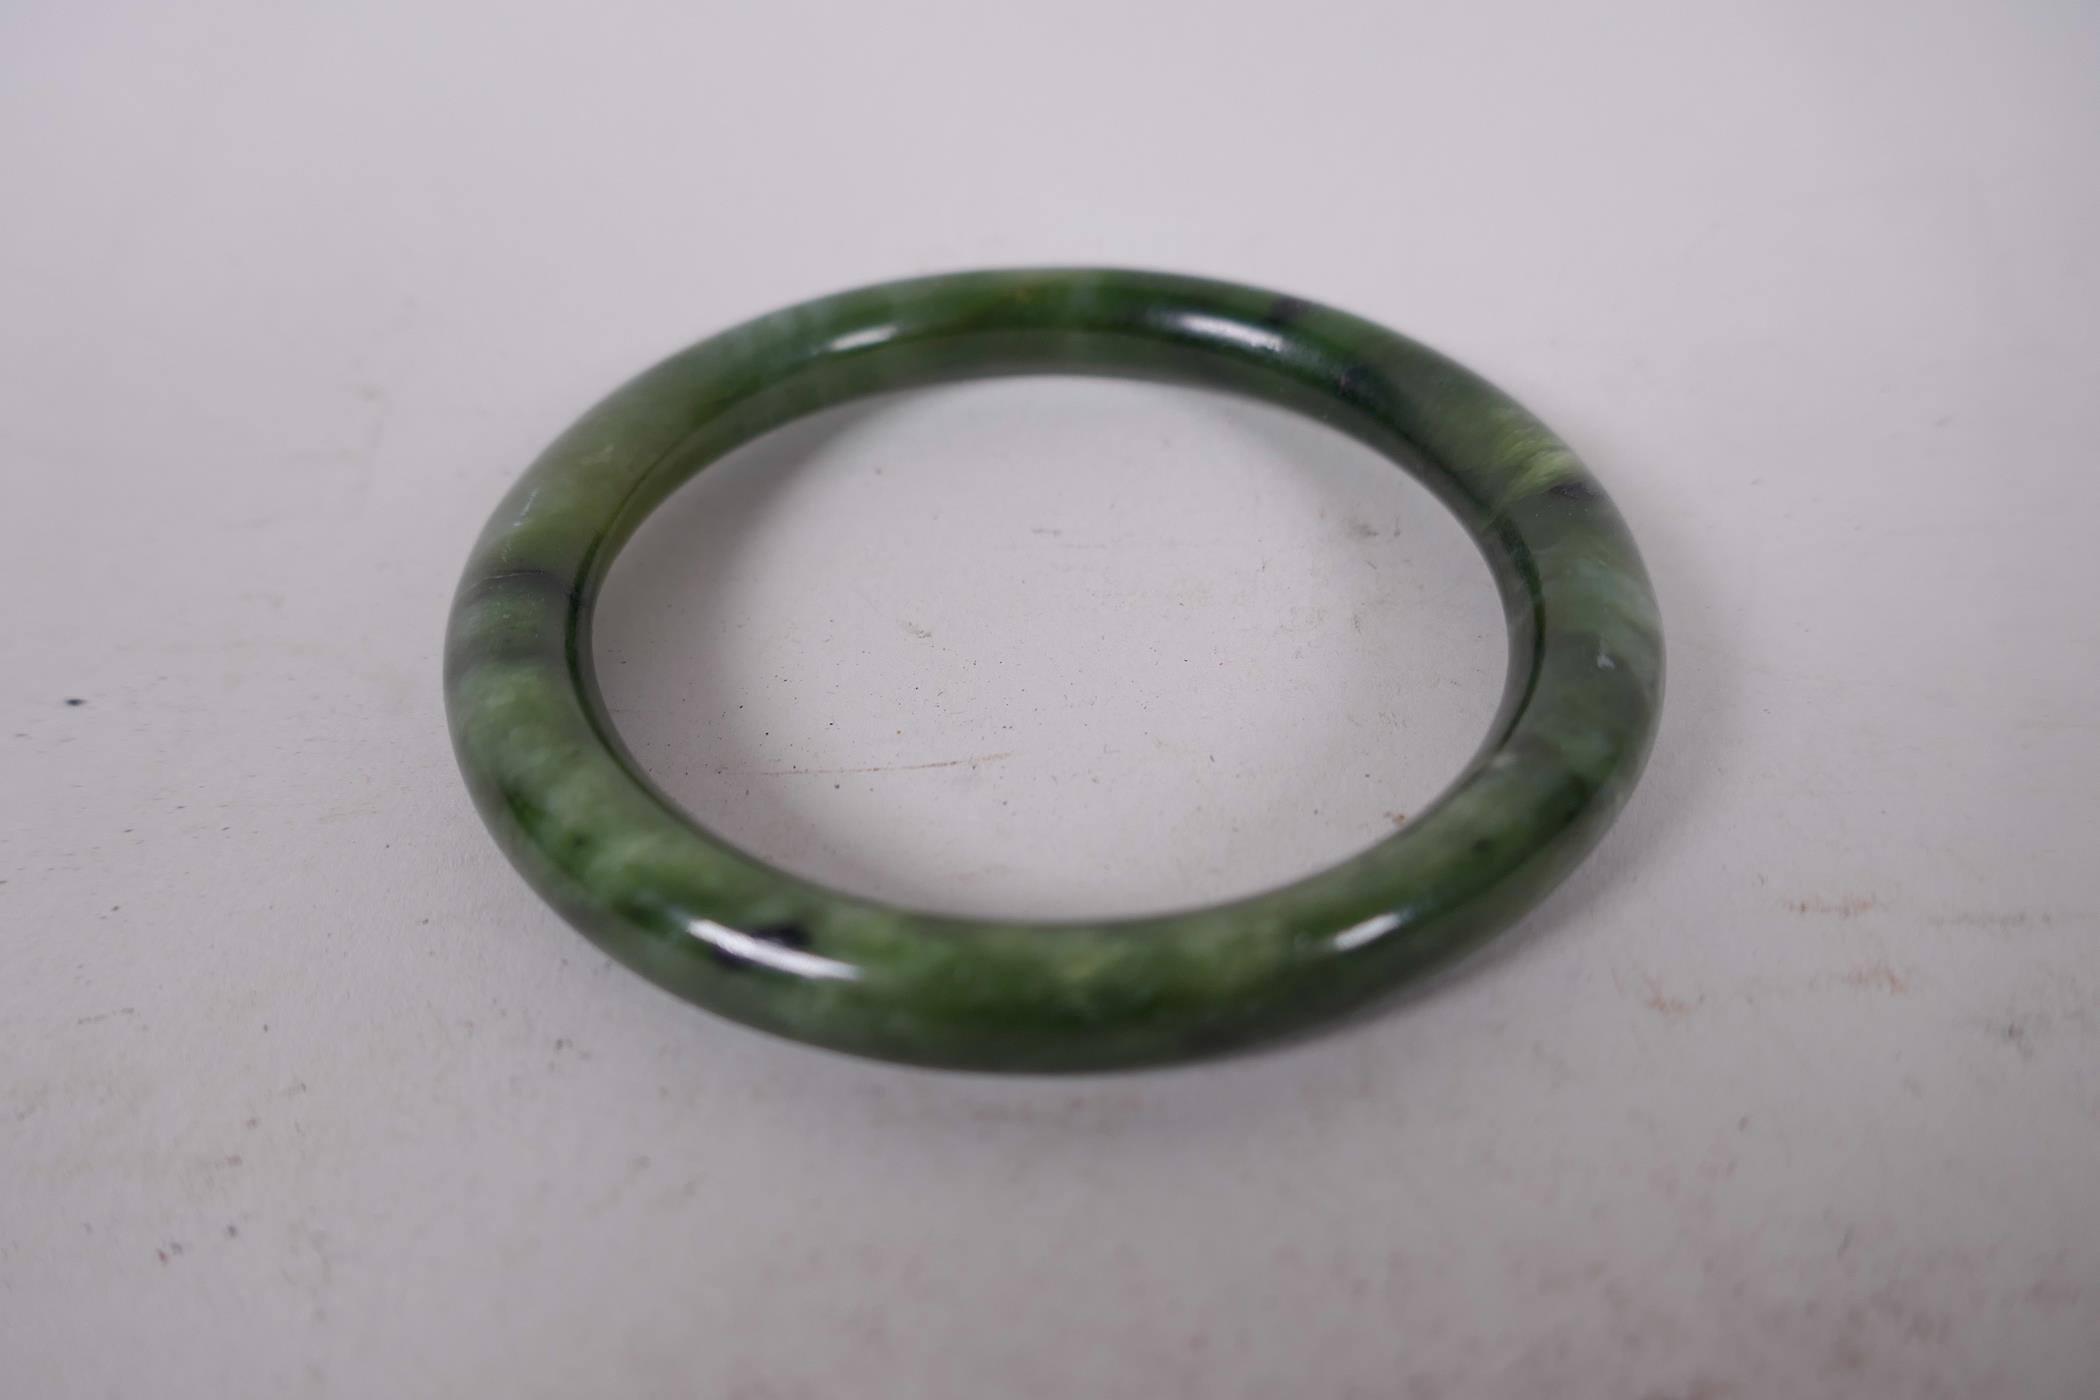 A Chinese marbled green jade bangle, 2¼" diameter, 43 grams